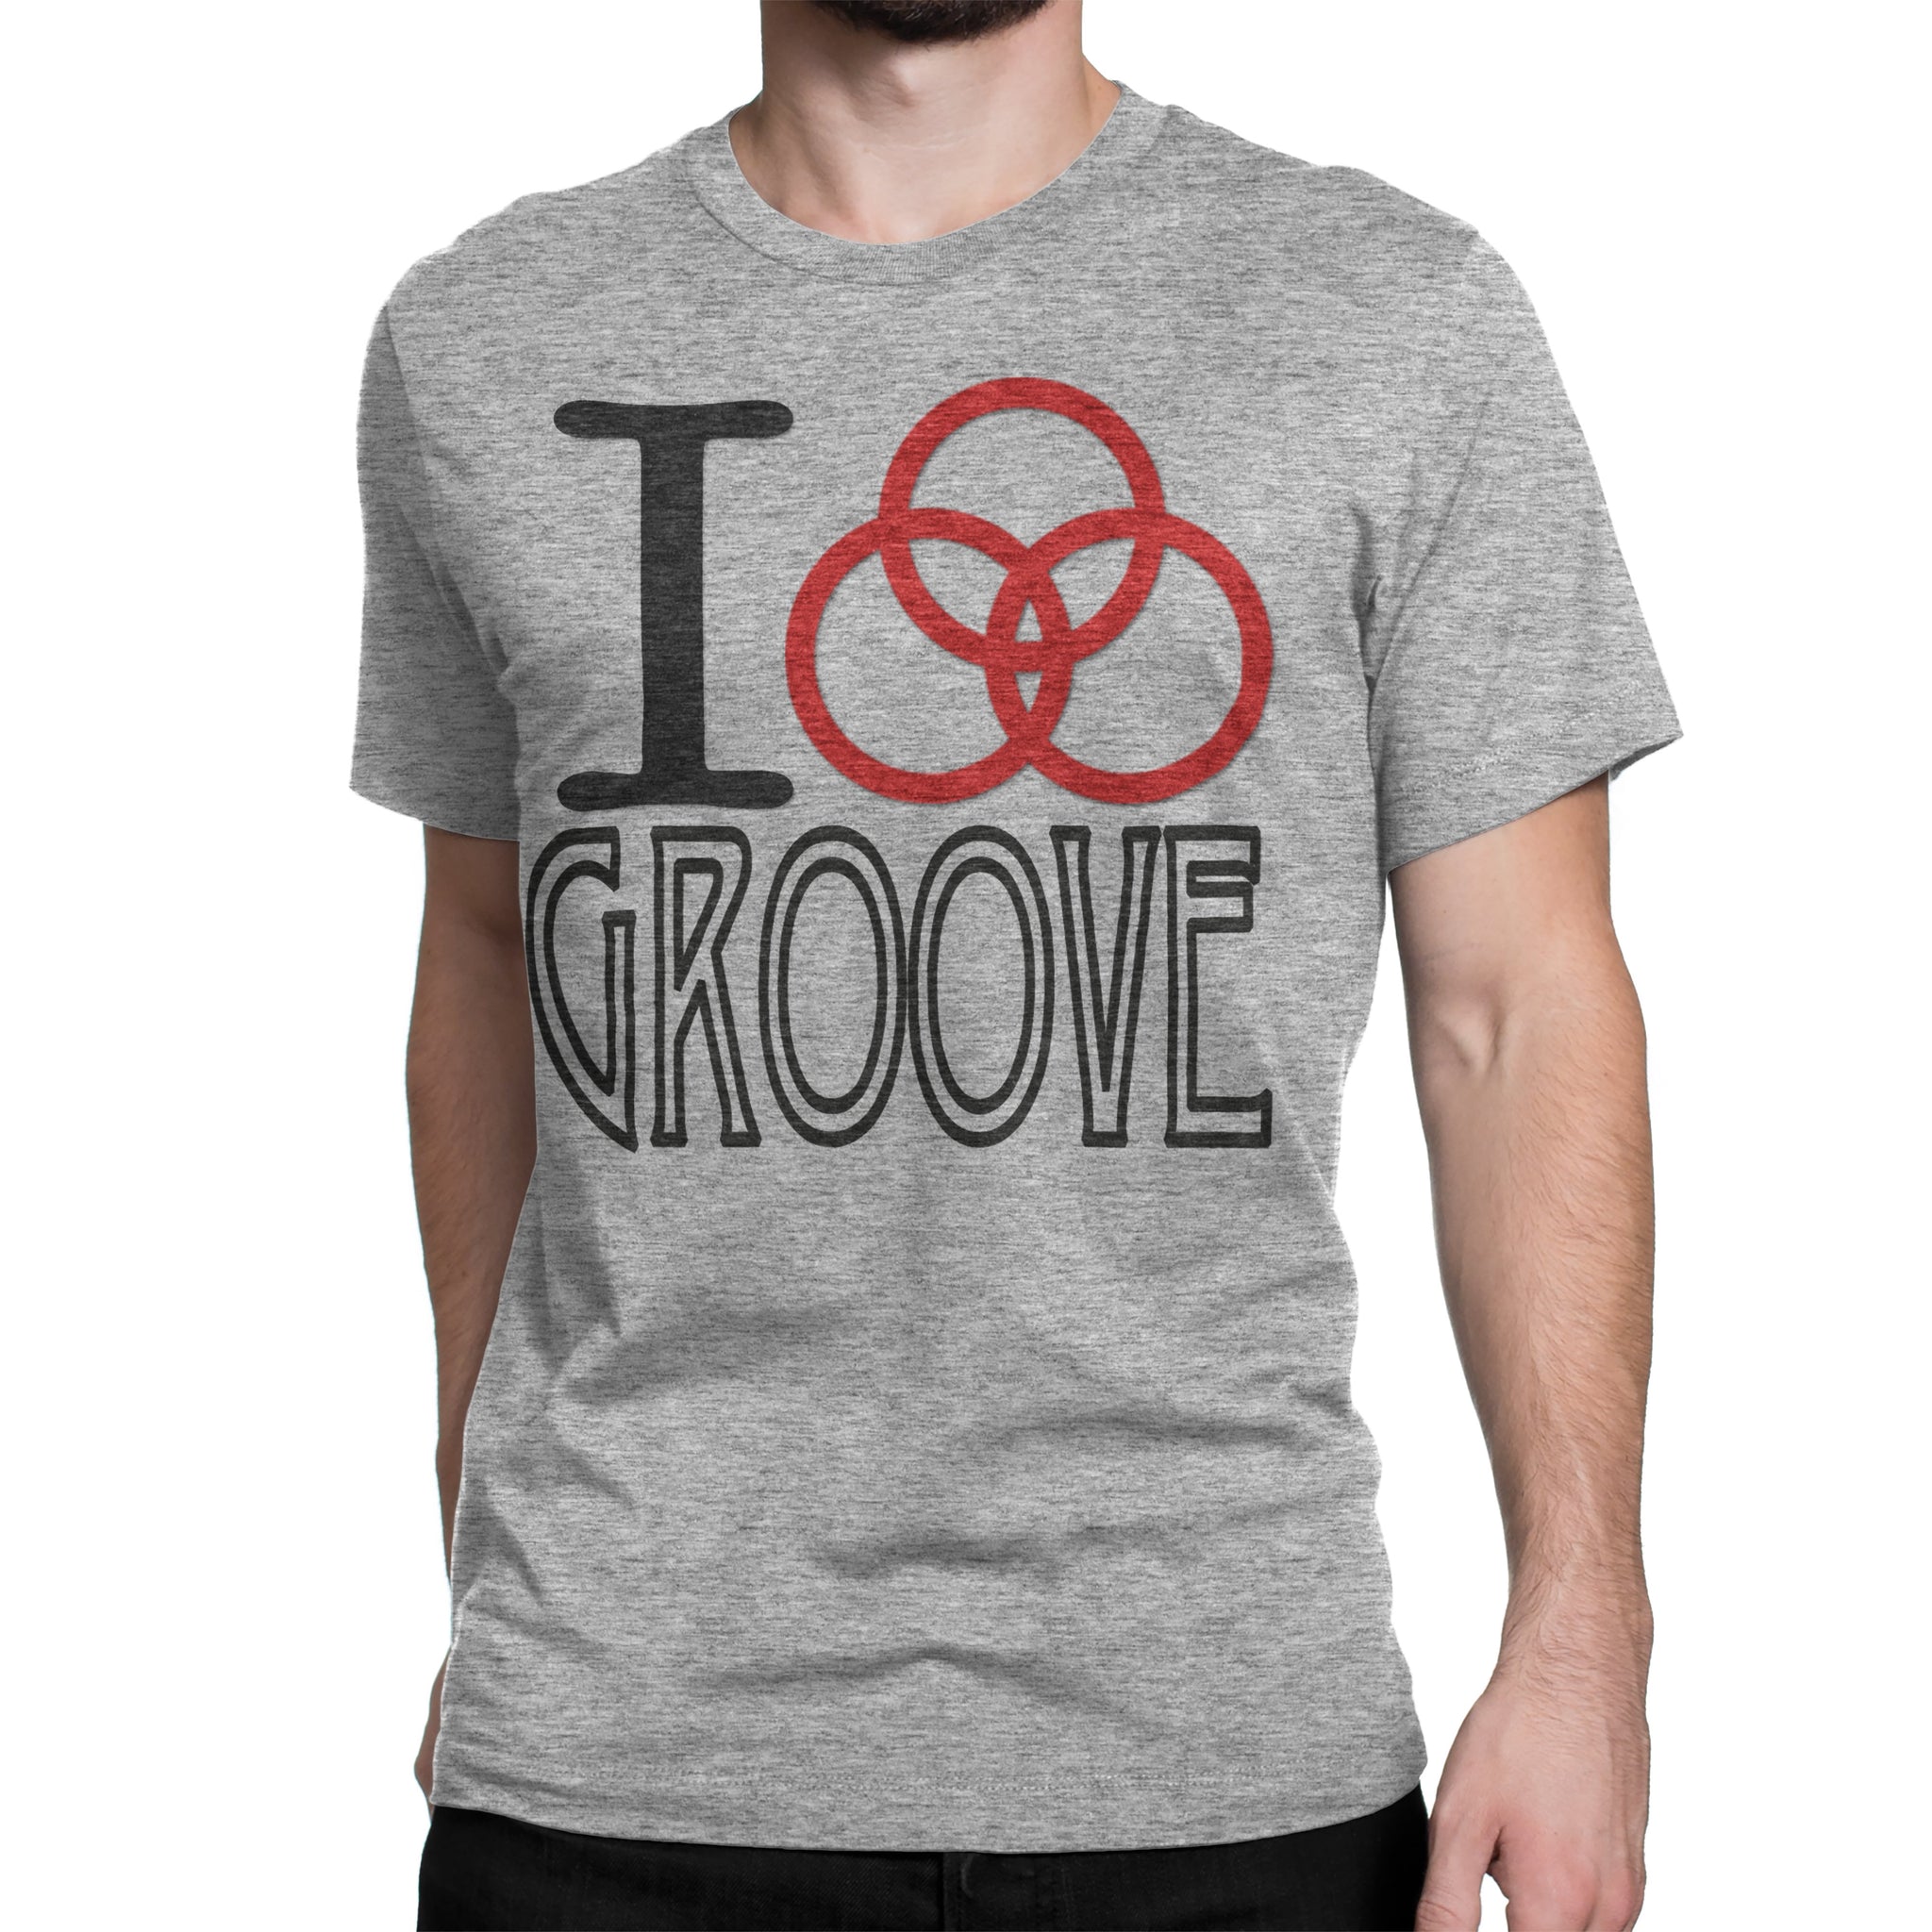 John Bonham "I Love Groove" Tee